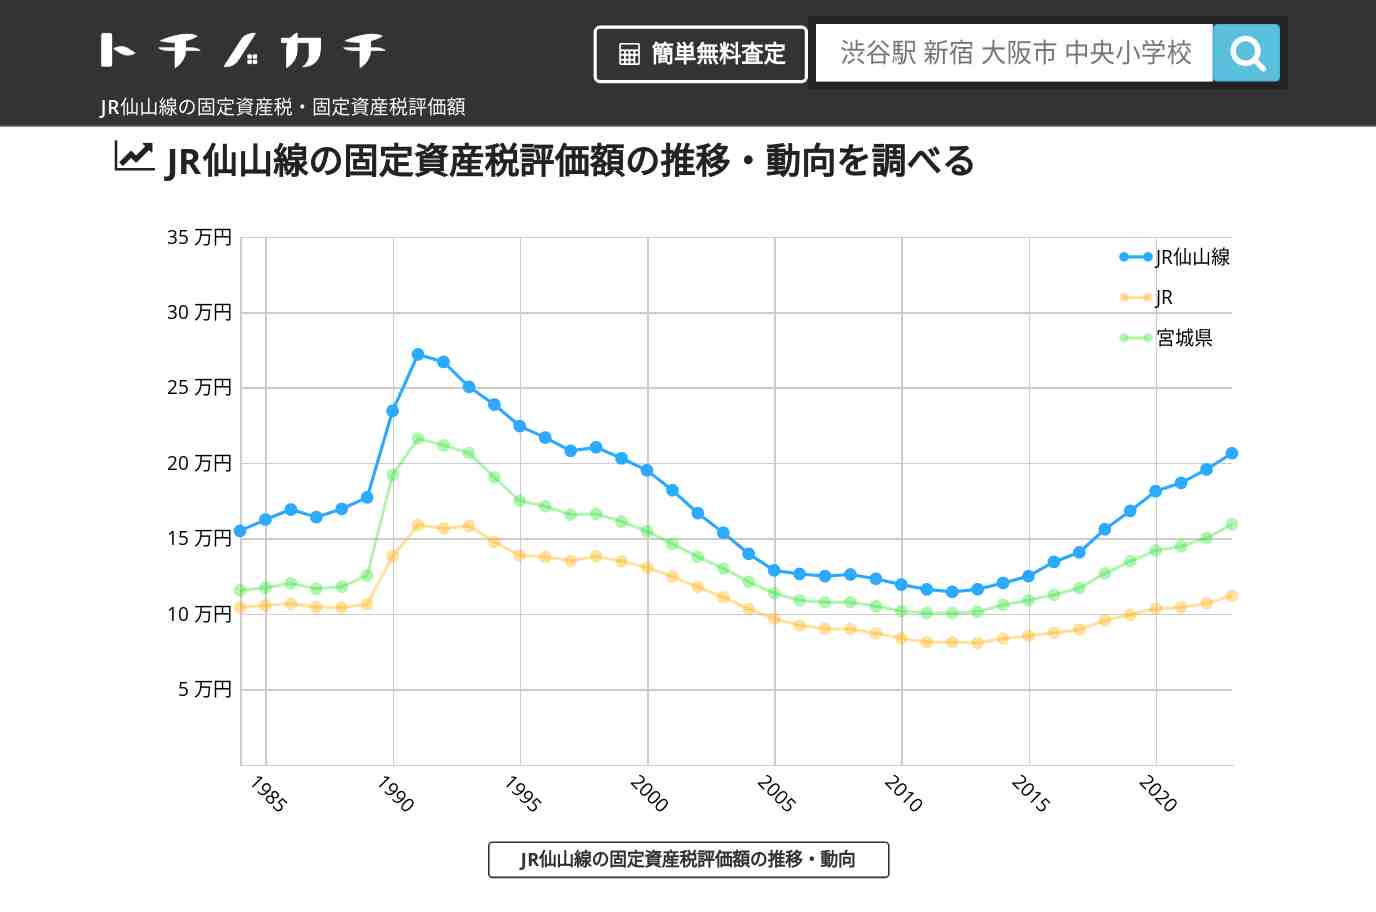 JR仙山線(JR)の固定資産税・固定資産税評価額 | トチノカチ